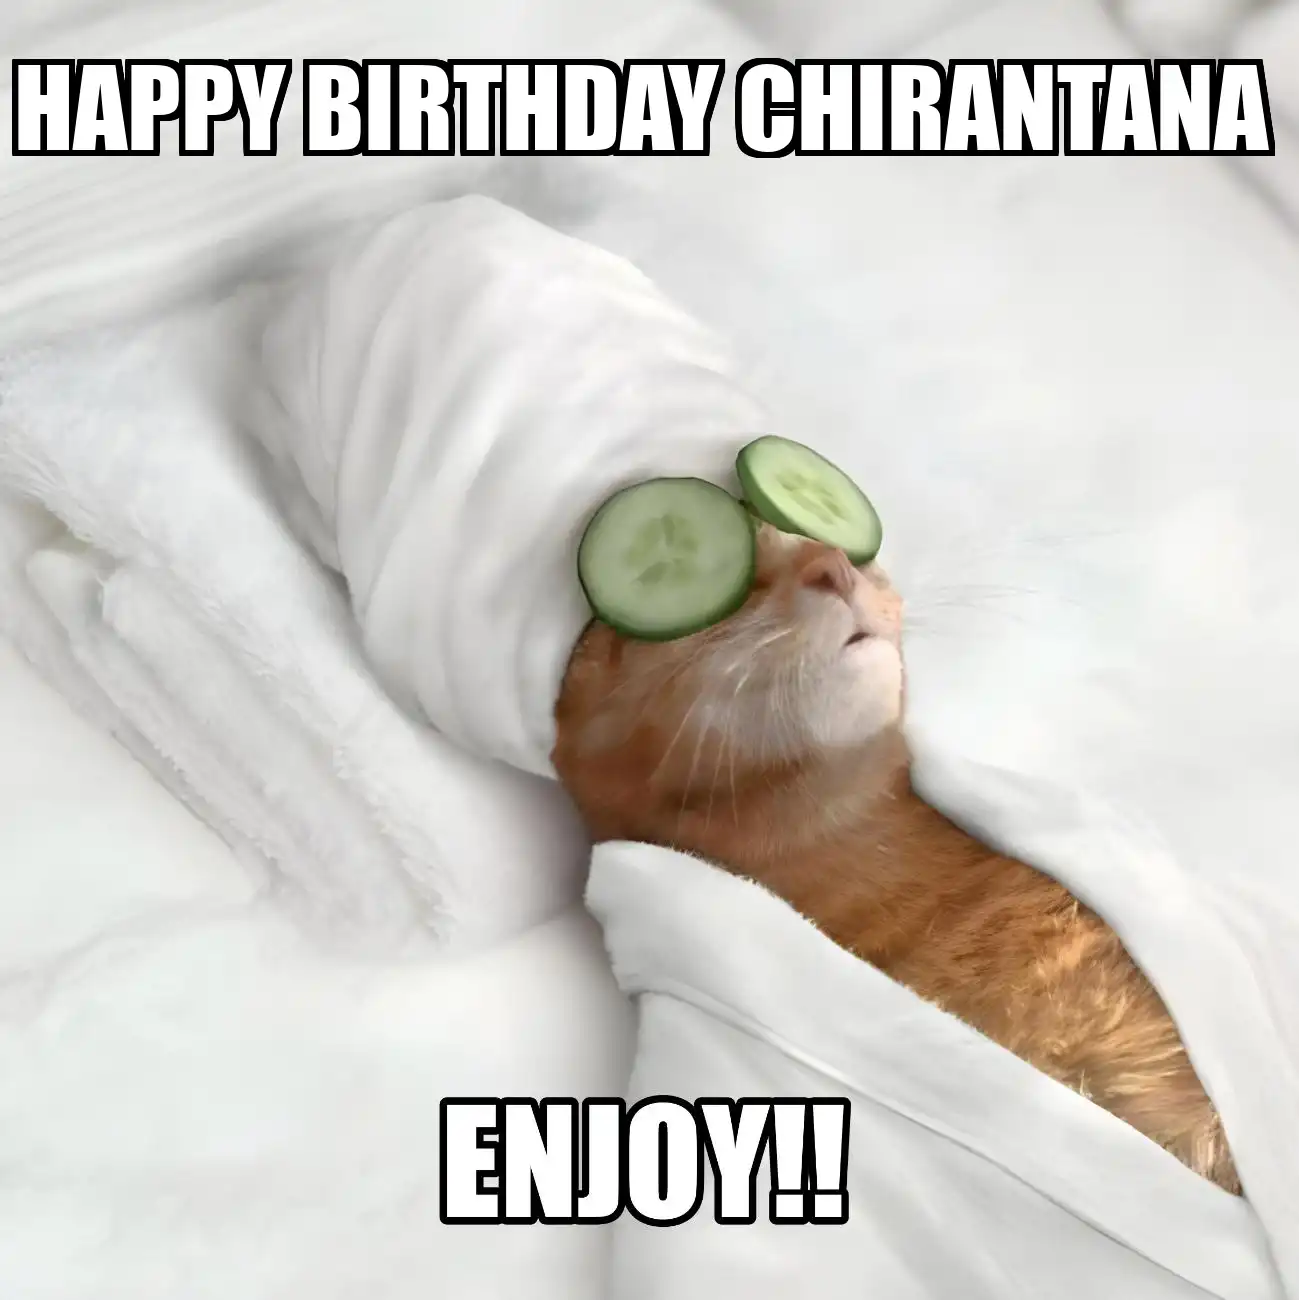 Happy Birthday Chirantana Enjoy Cat Meme